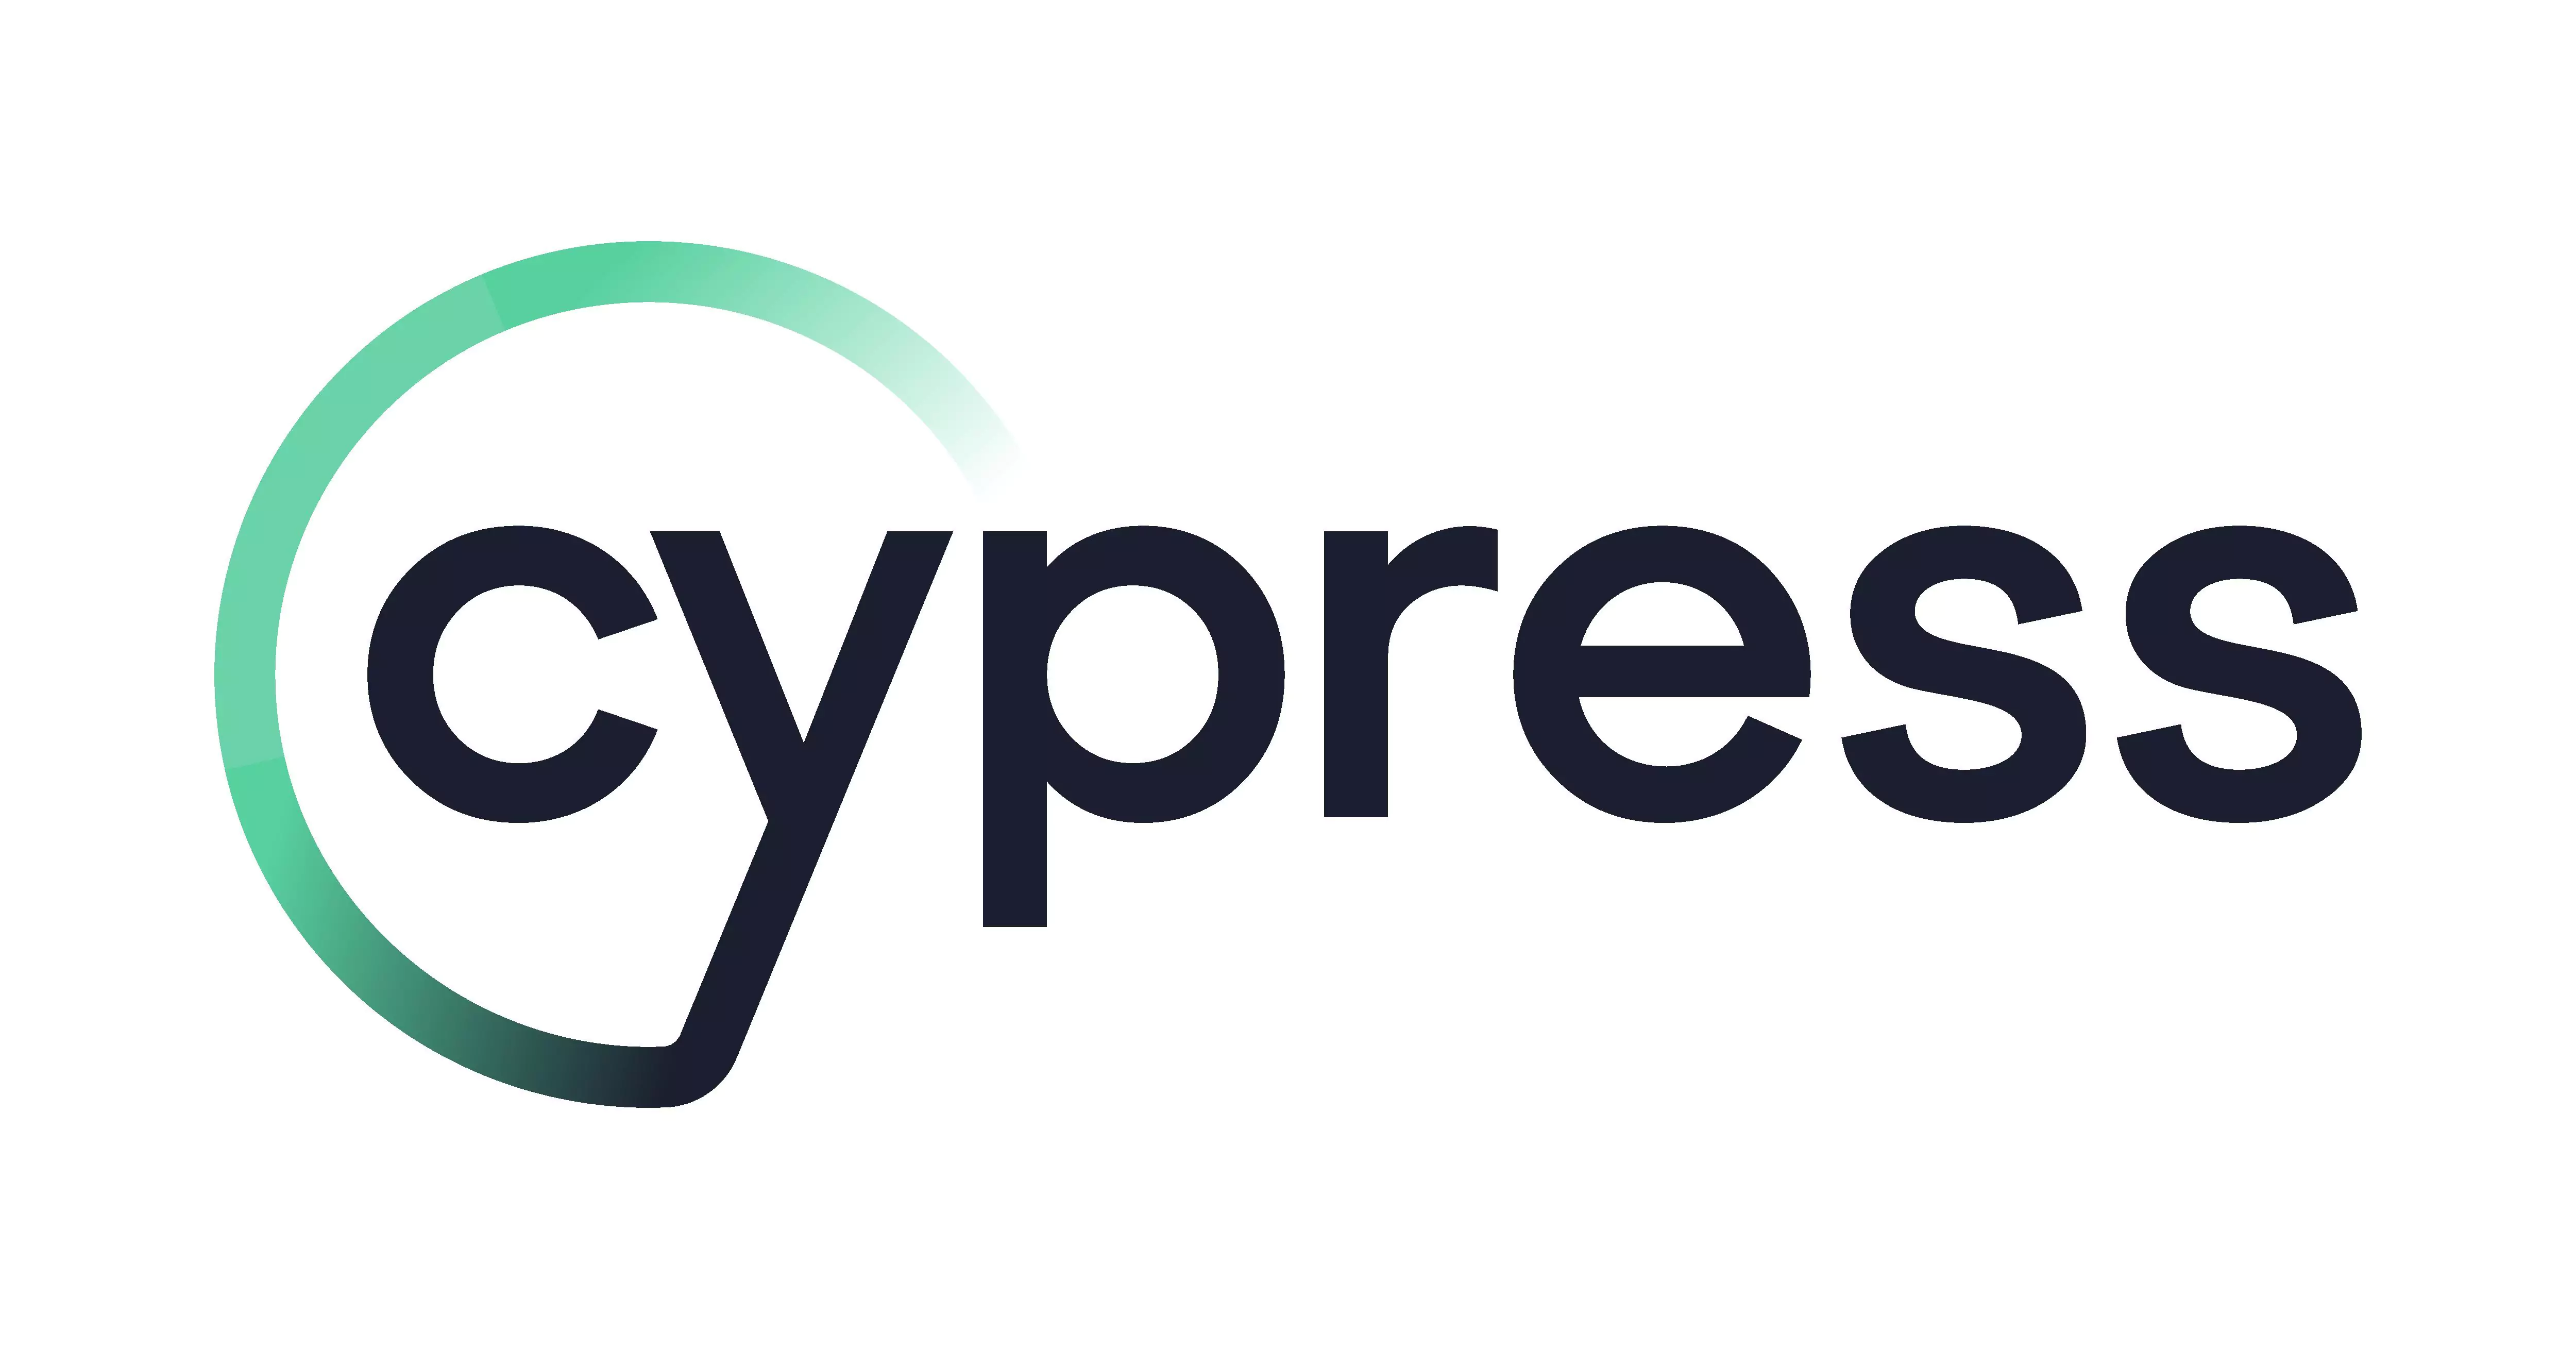 Cypress Framework